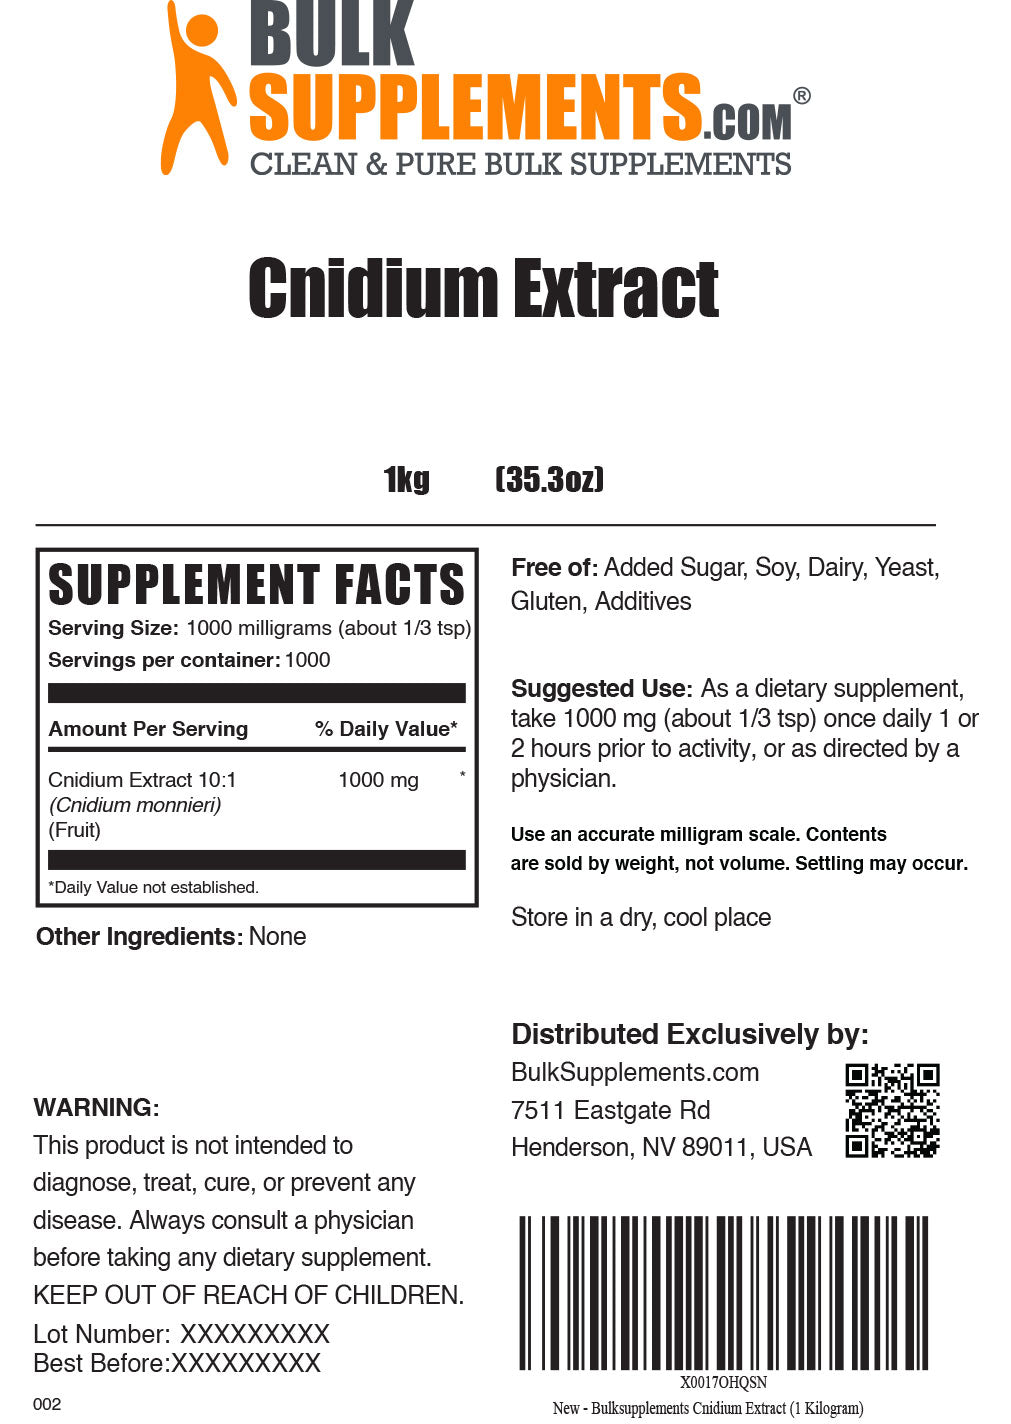 1kg cnidium monnieri extract supplement facts